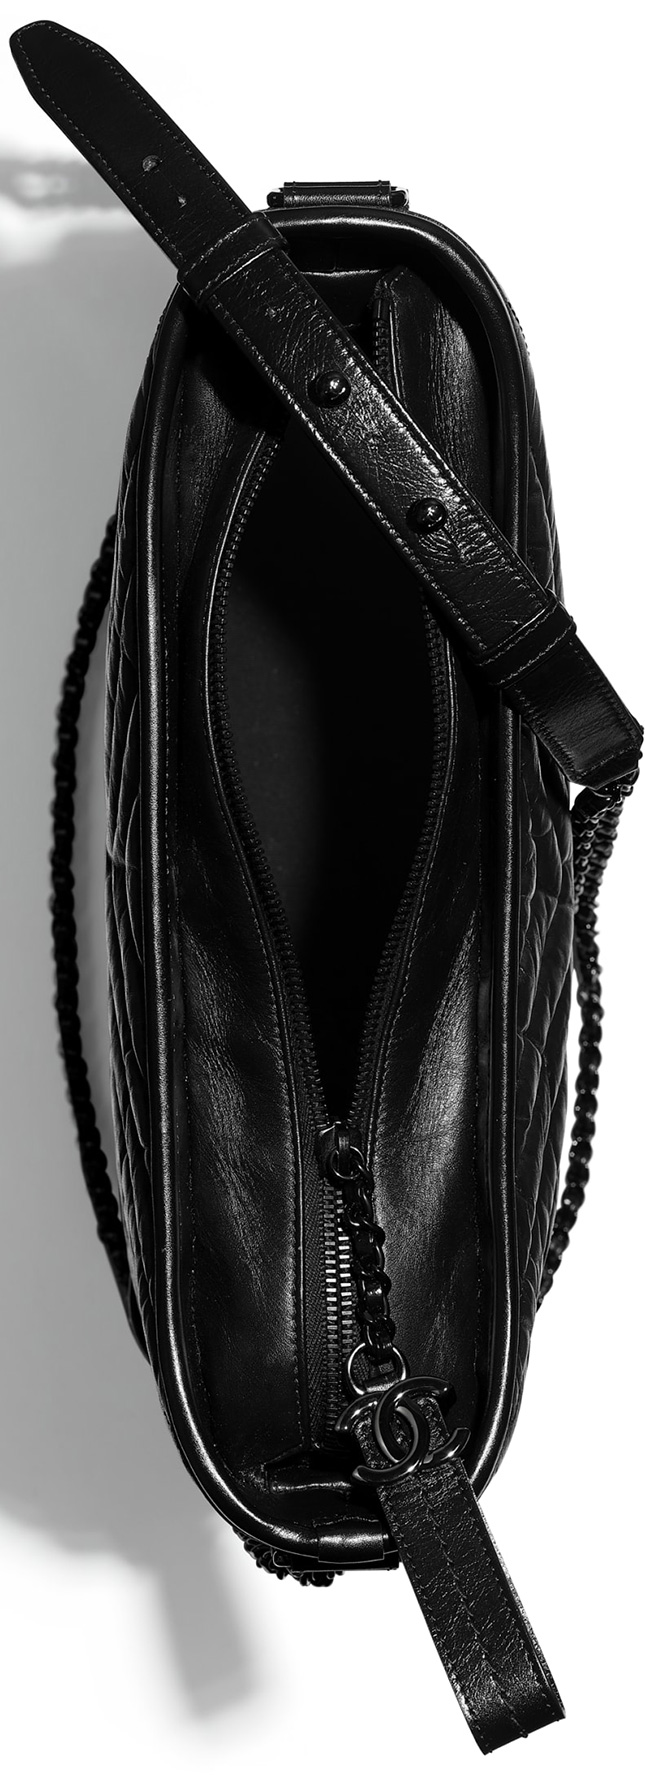 chanel gabrielle bag black